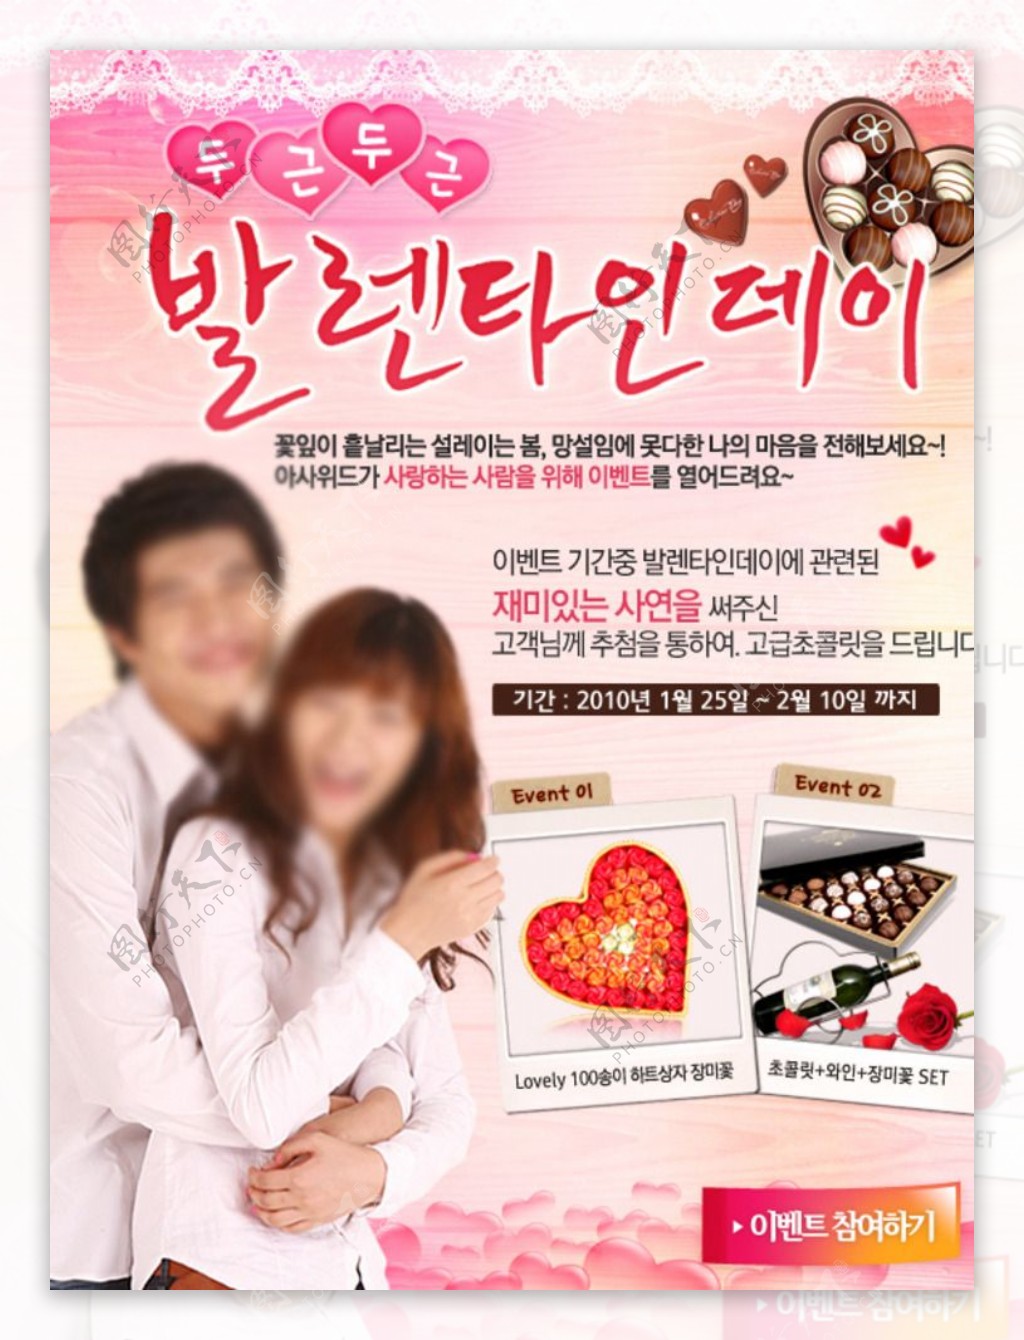 韩国广告素材banner图片